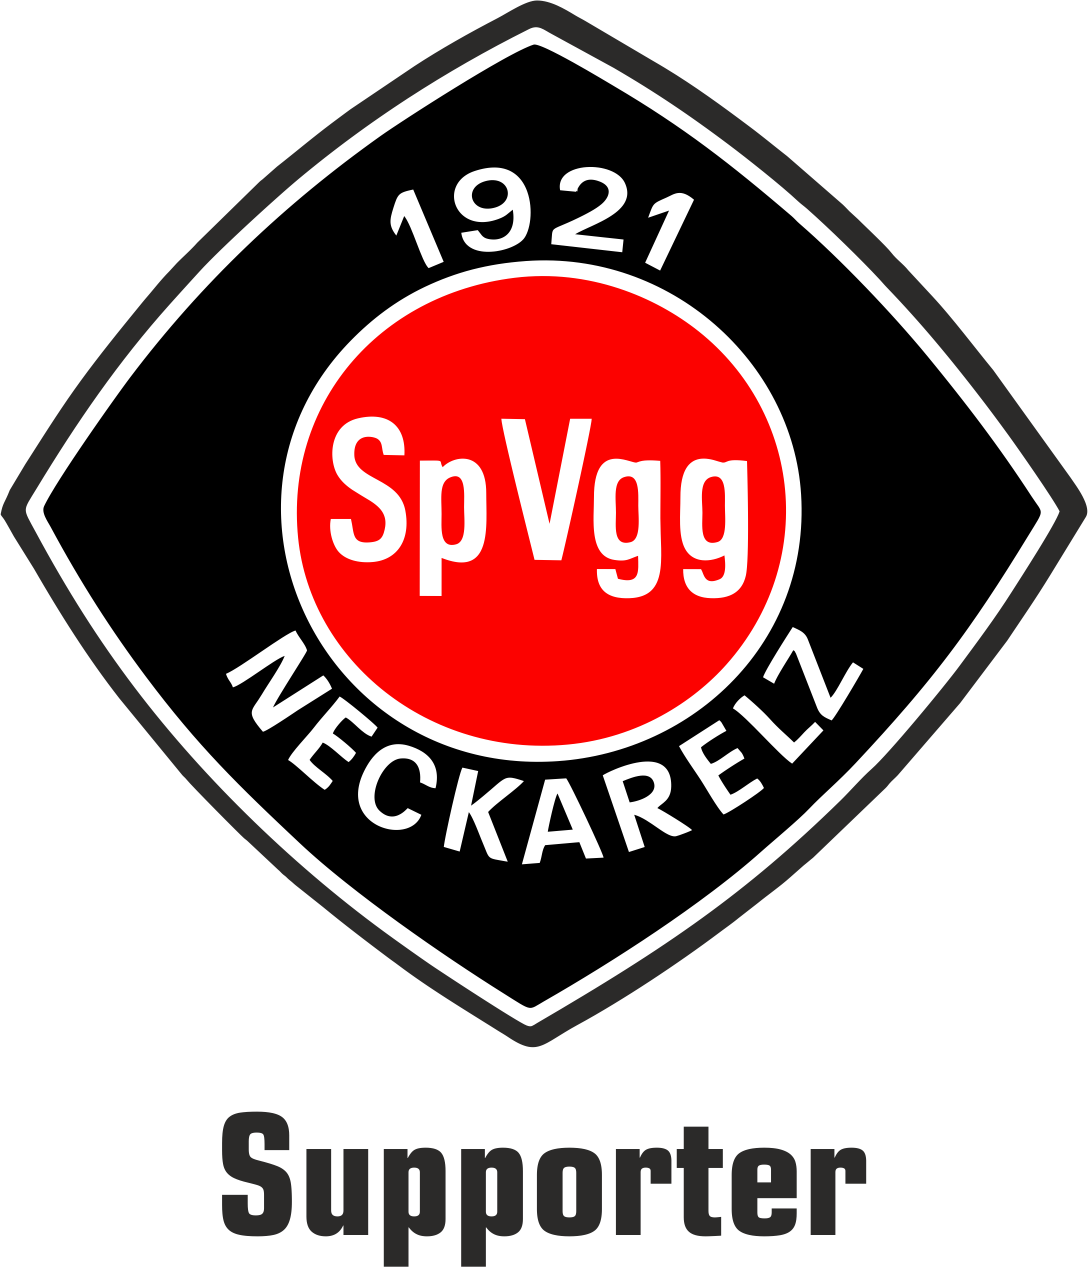 SpVgg Neckarelz Supporter Logo